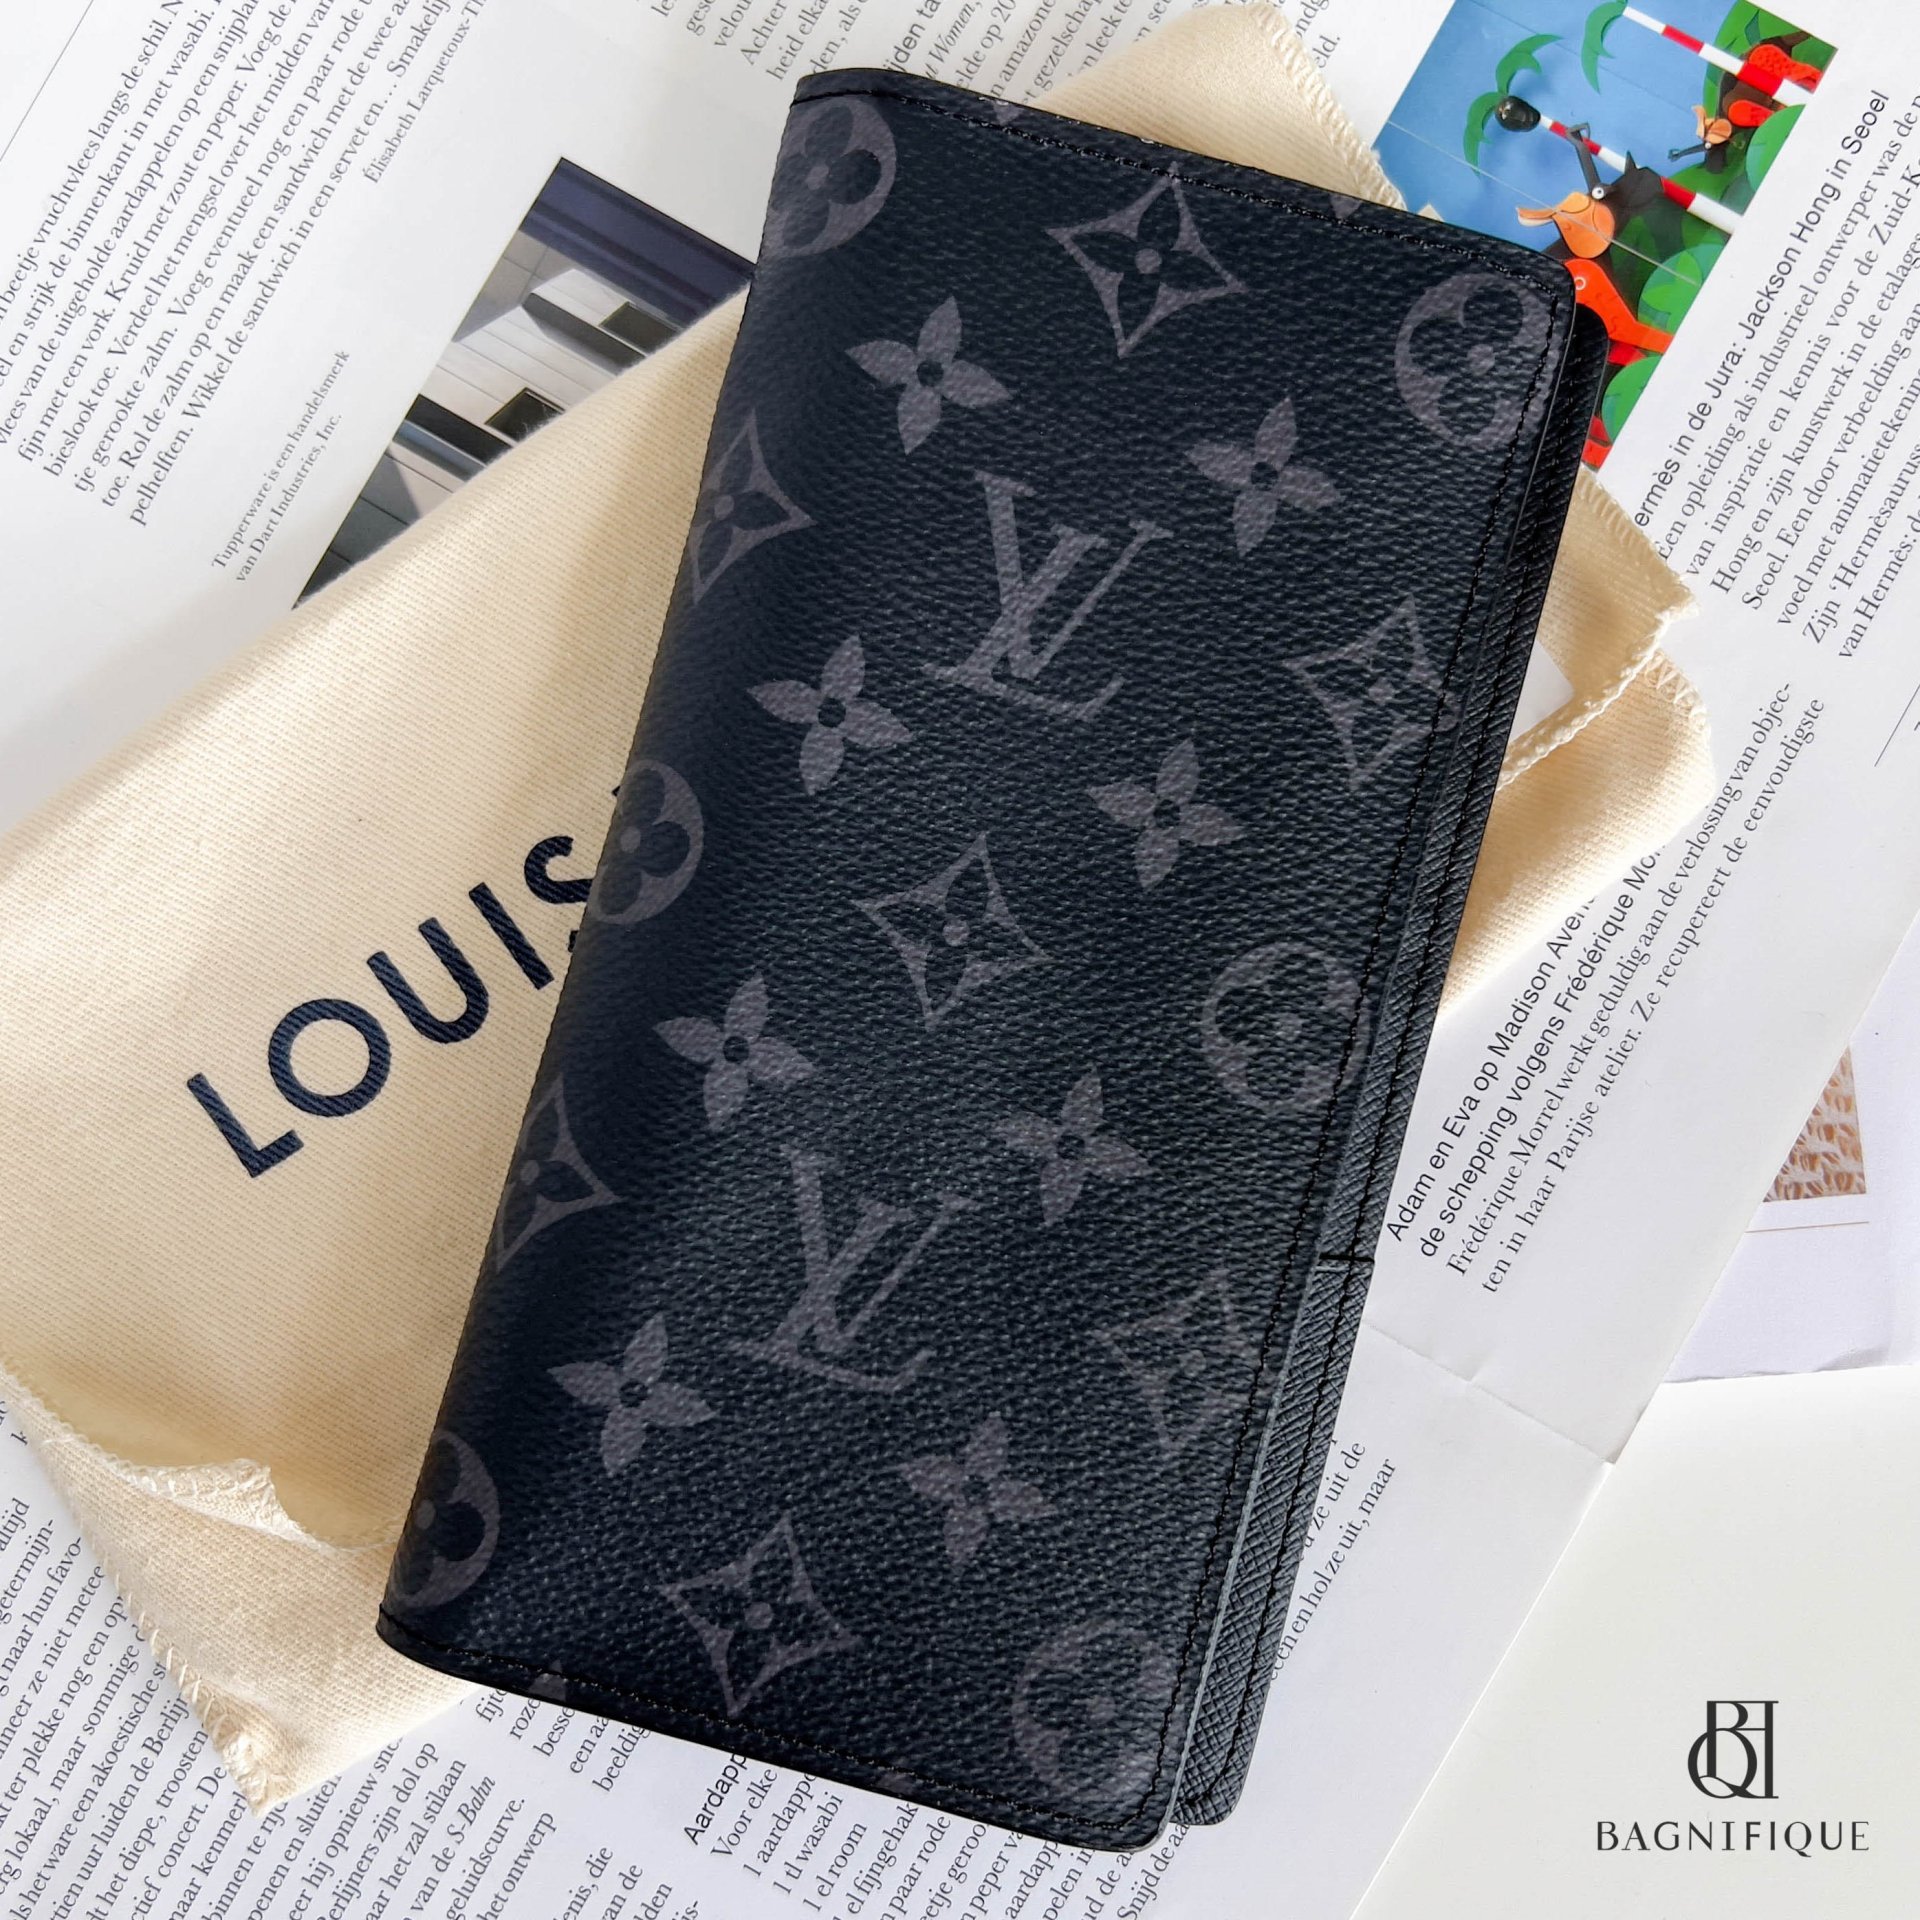 Louis Vuitton Brazza Wallet